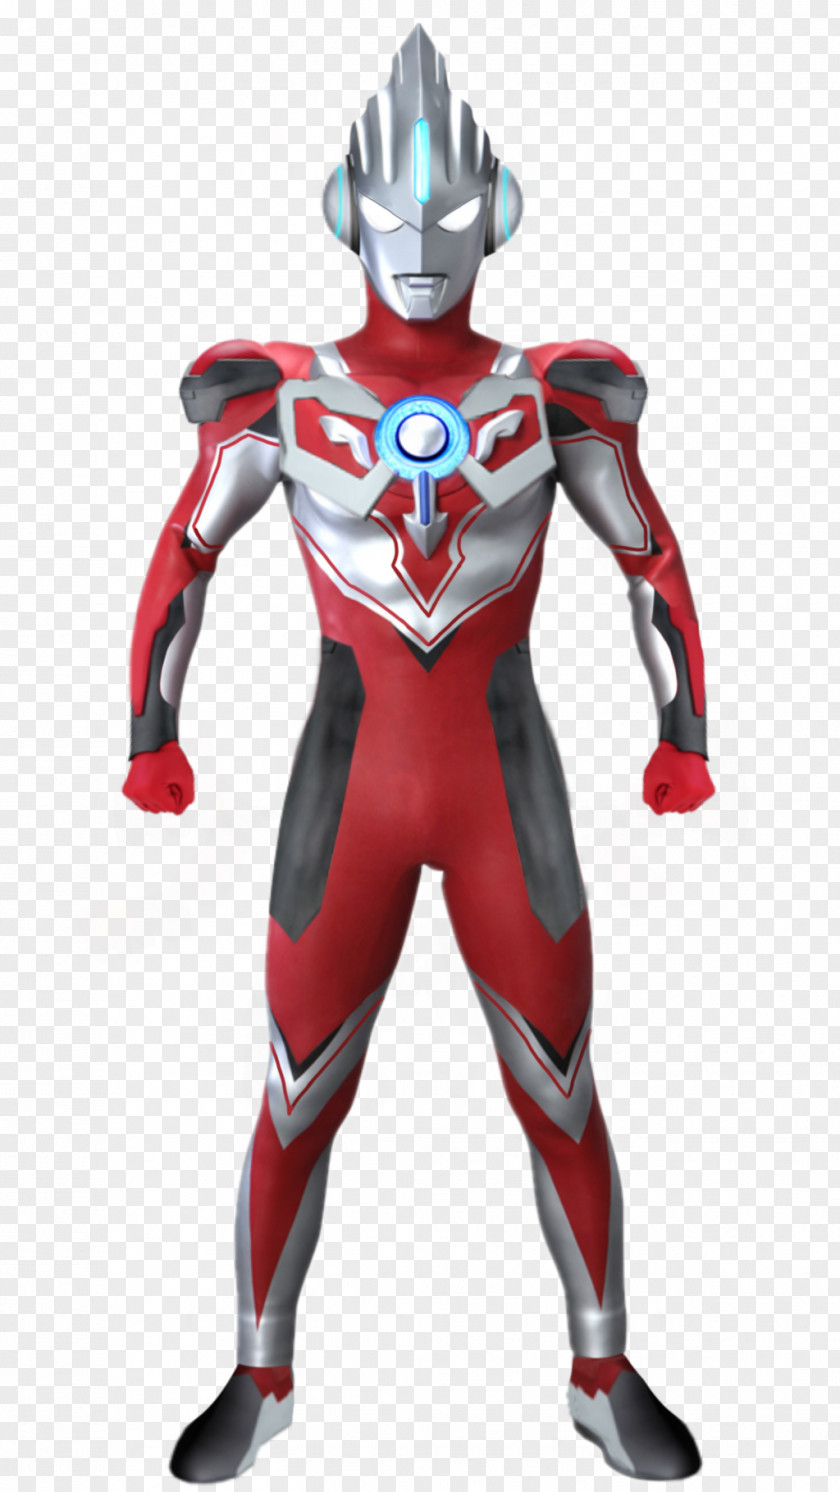 Ultra Man Ultraman Zero Series Tokusatsu Character Kamen Rider PNG